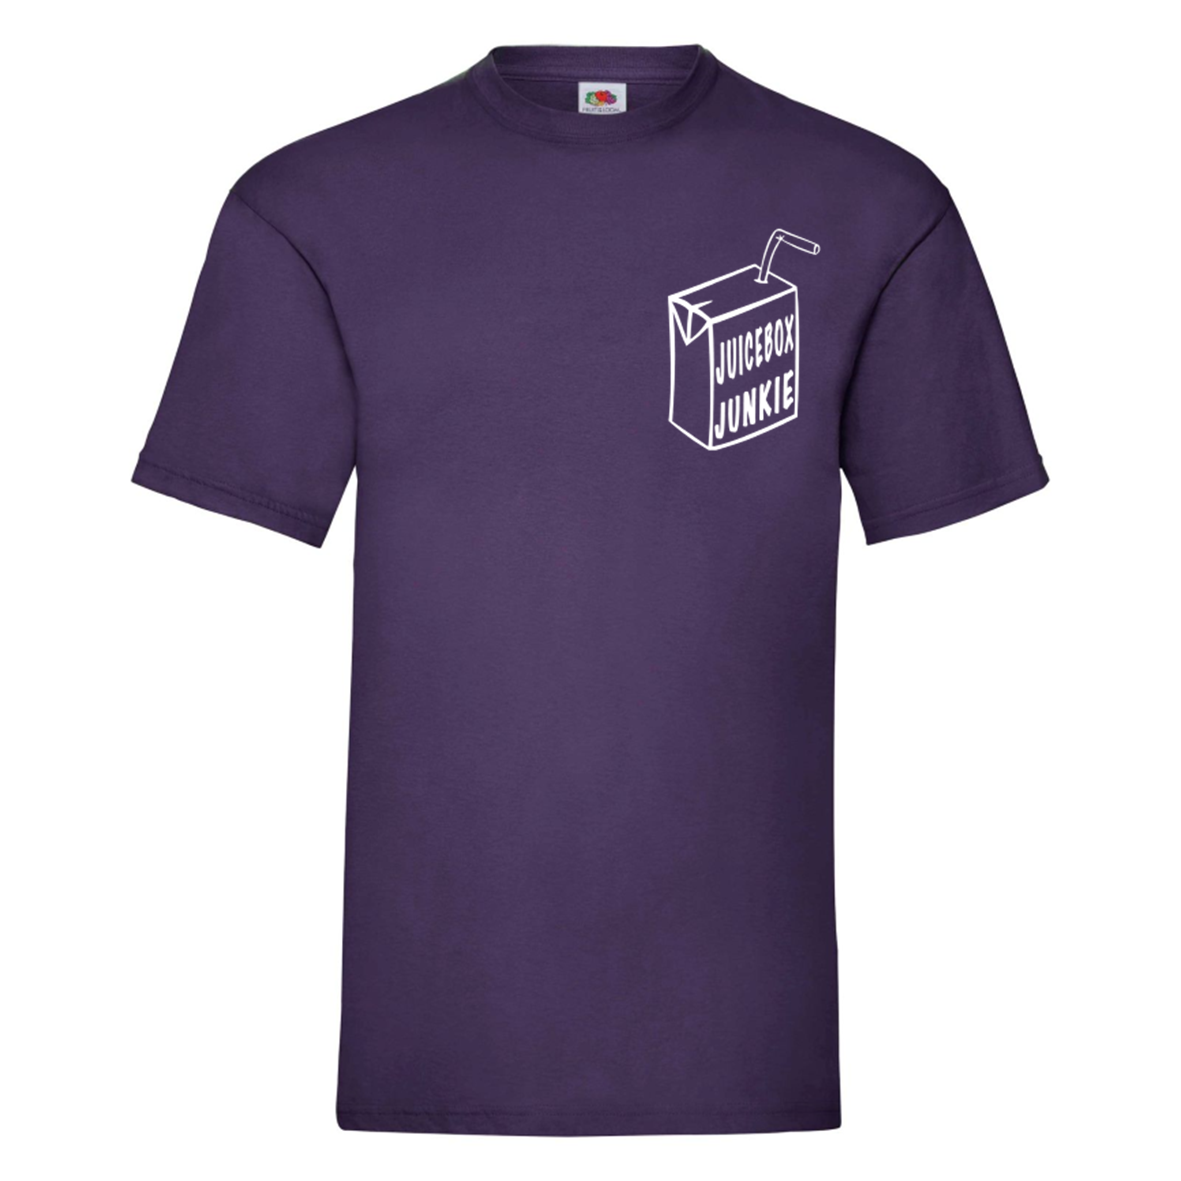 Juicebox Junkie T Shirt